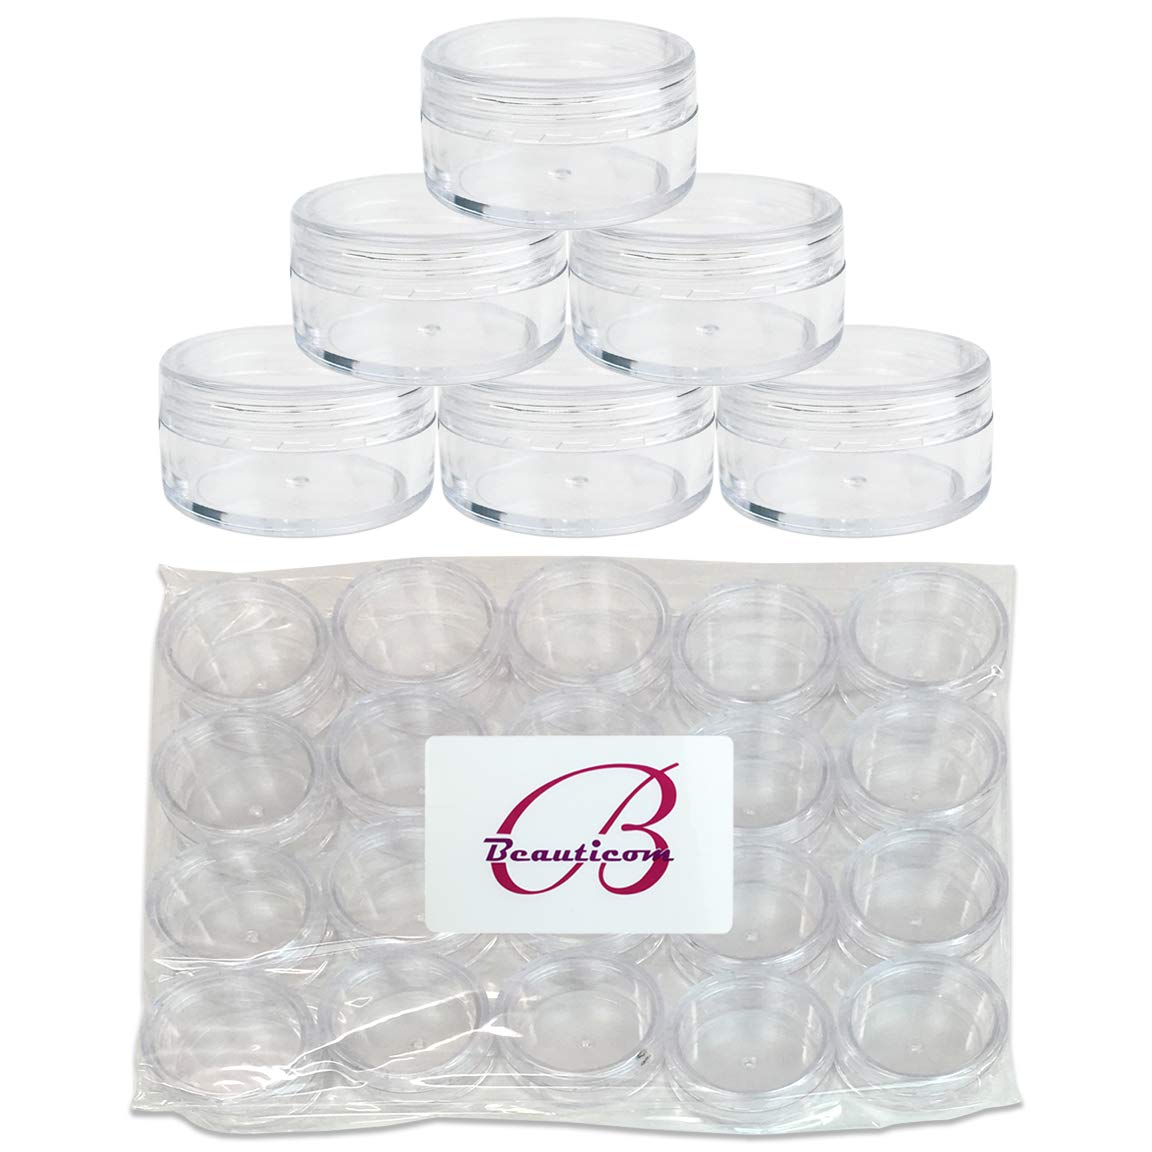 (Quantity: 100 Pieces) Beauticom® 10G/10ML Clear Lid Plastic Cosmetic Lip Balm Lip Gloss Cream Lotion Eyeshadow Container Jars